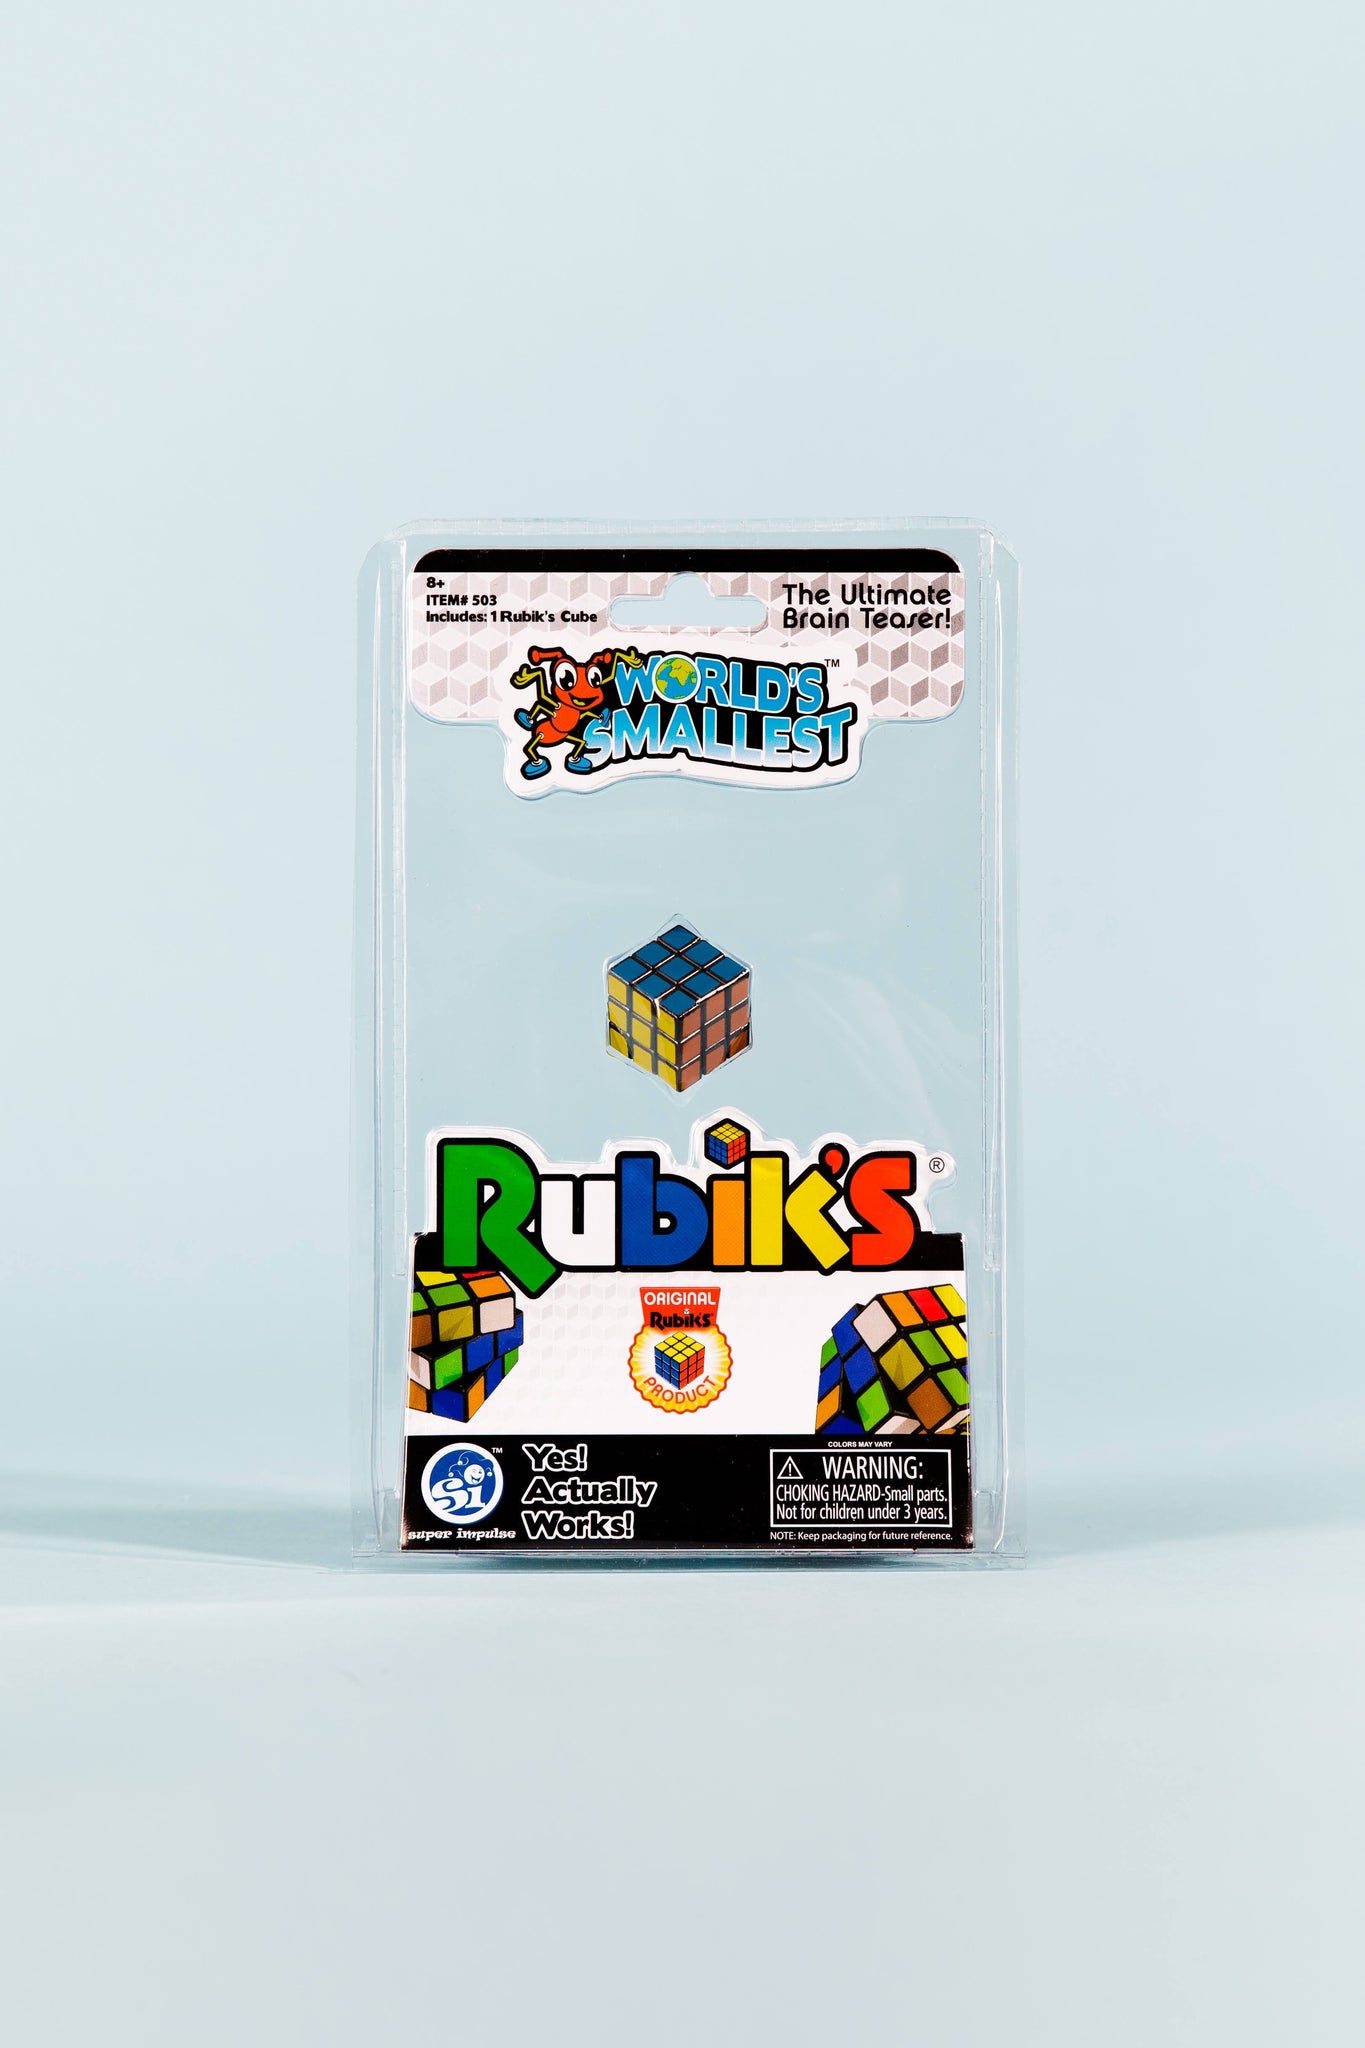 Rubik's Cube Puzzle World's Smallest